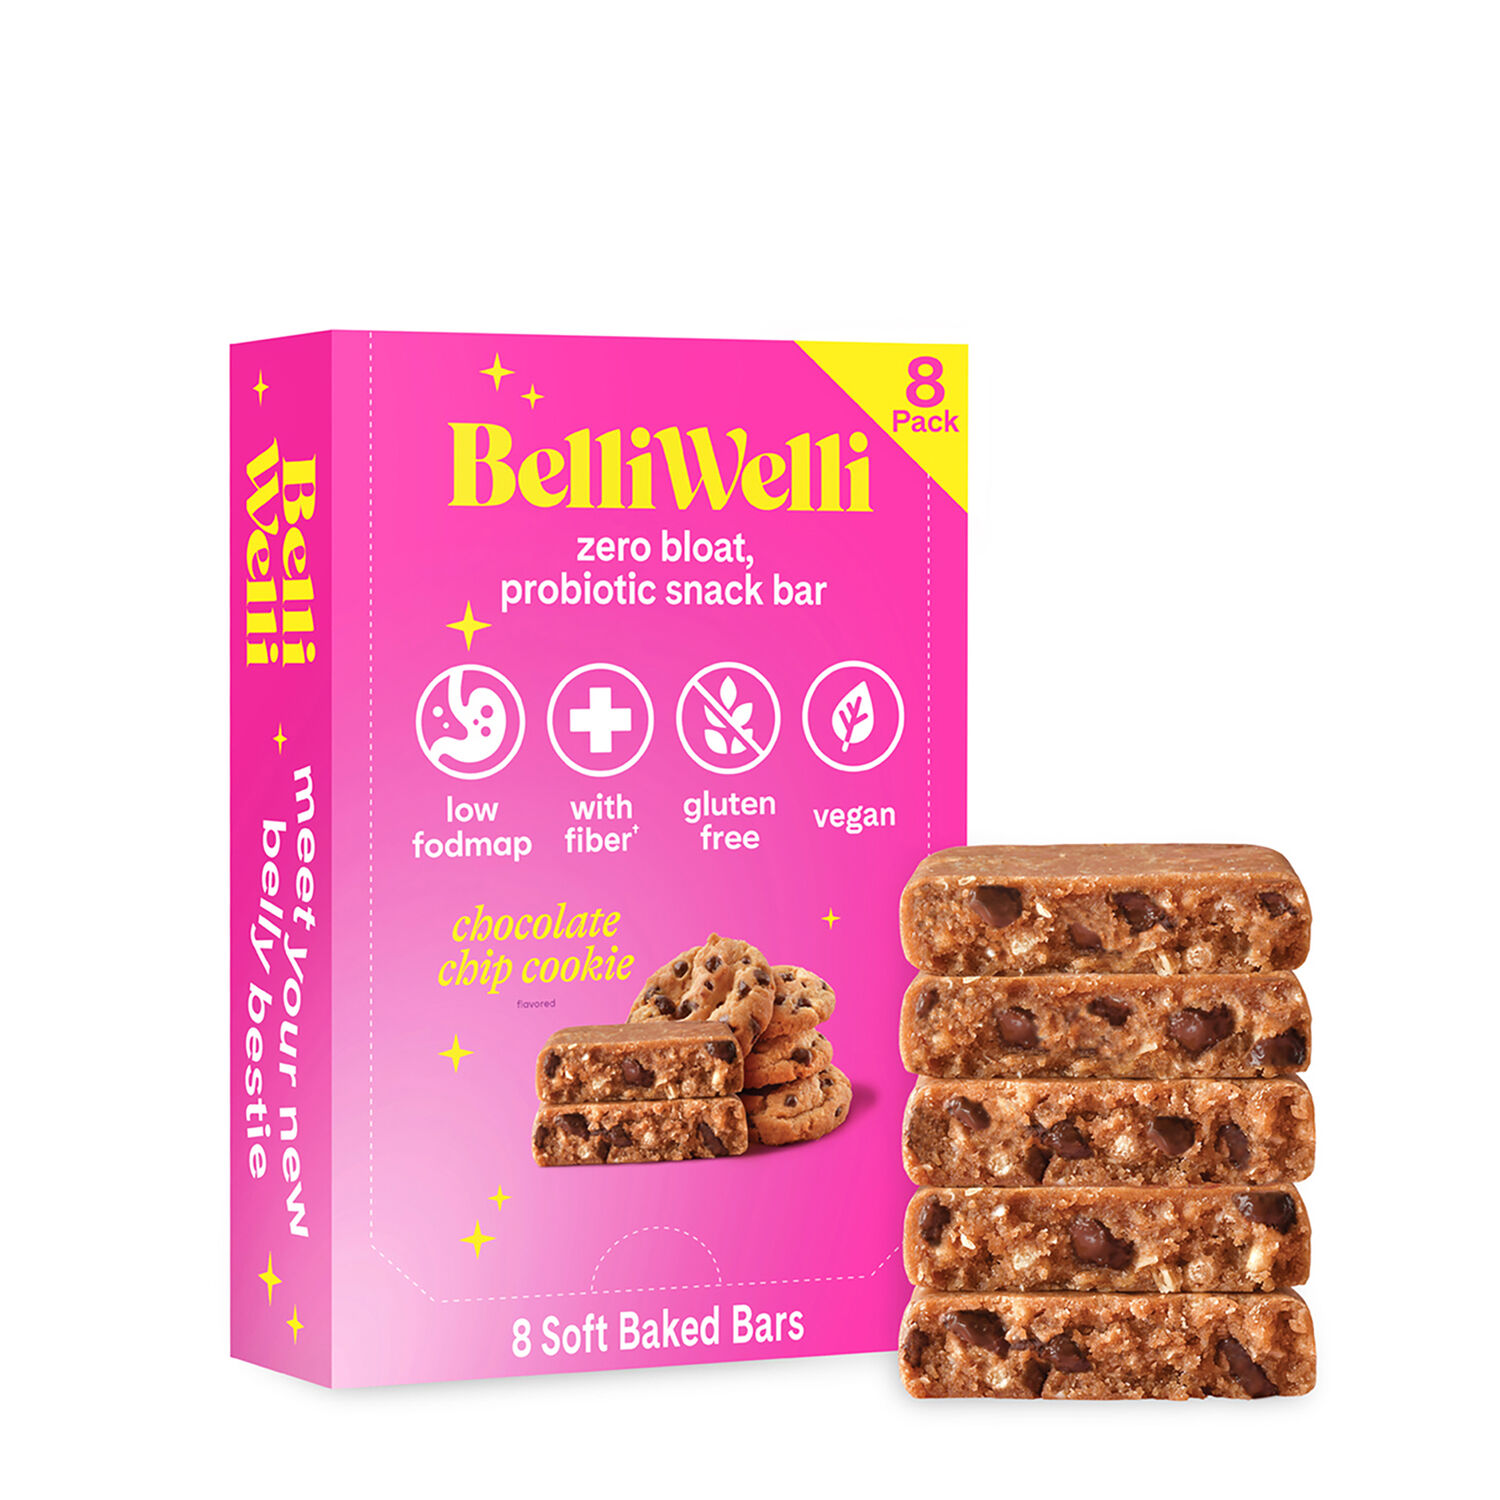 BelliWelli Probiotic Snack Bar Vegan